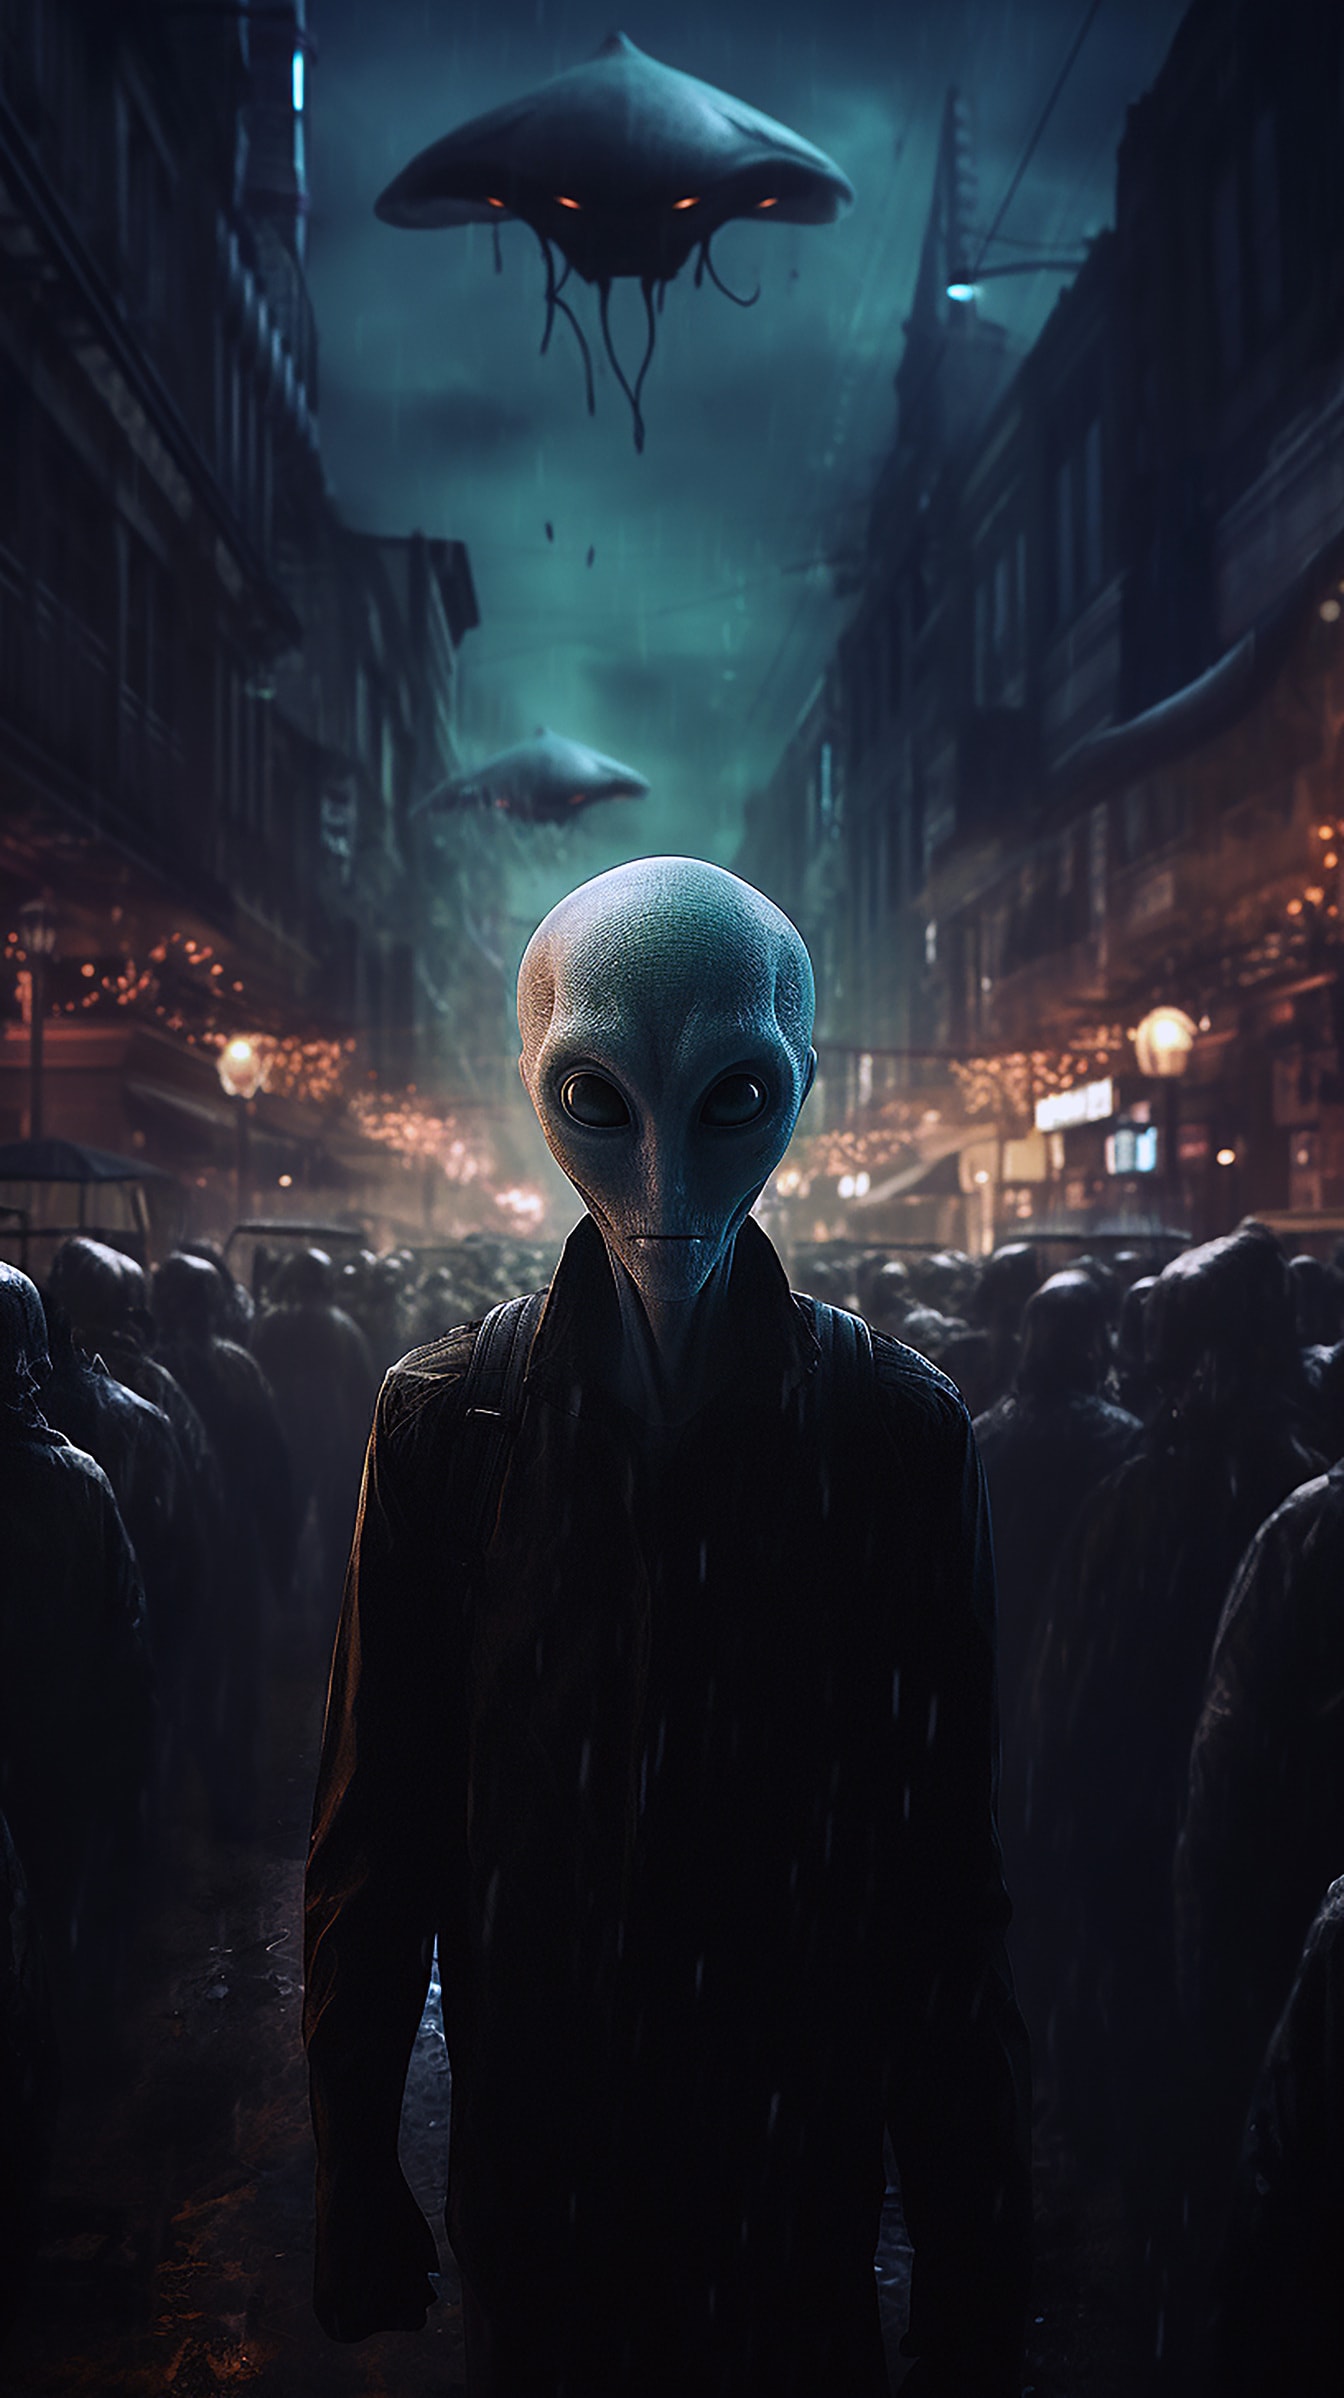 Humanoidni vanzemaljac na ulici noću fantazija horor ilustracija